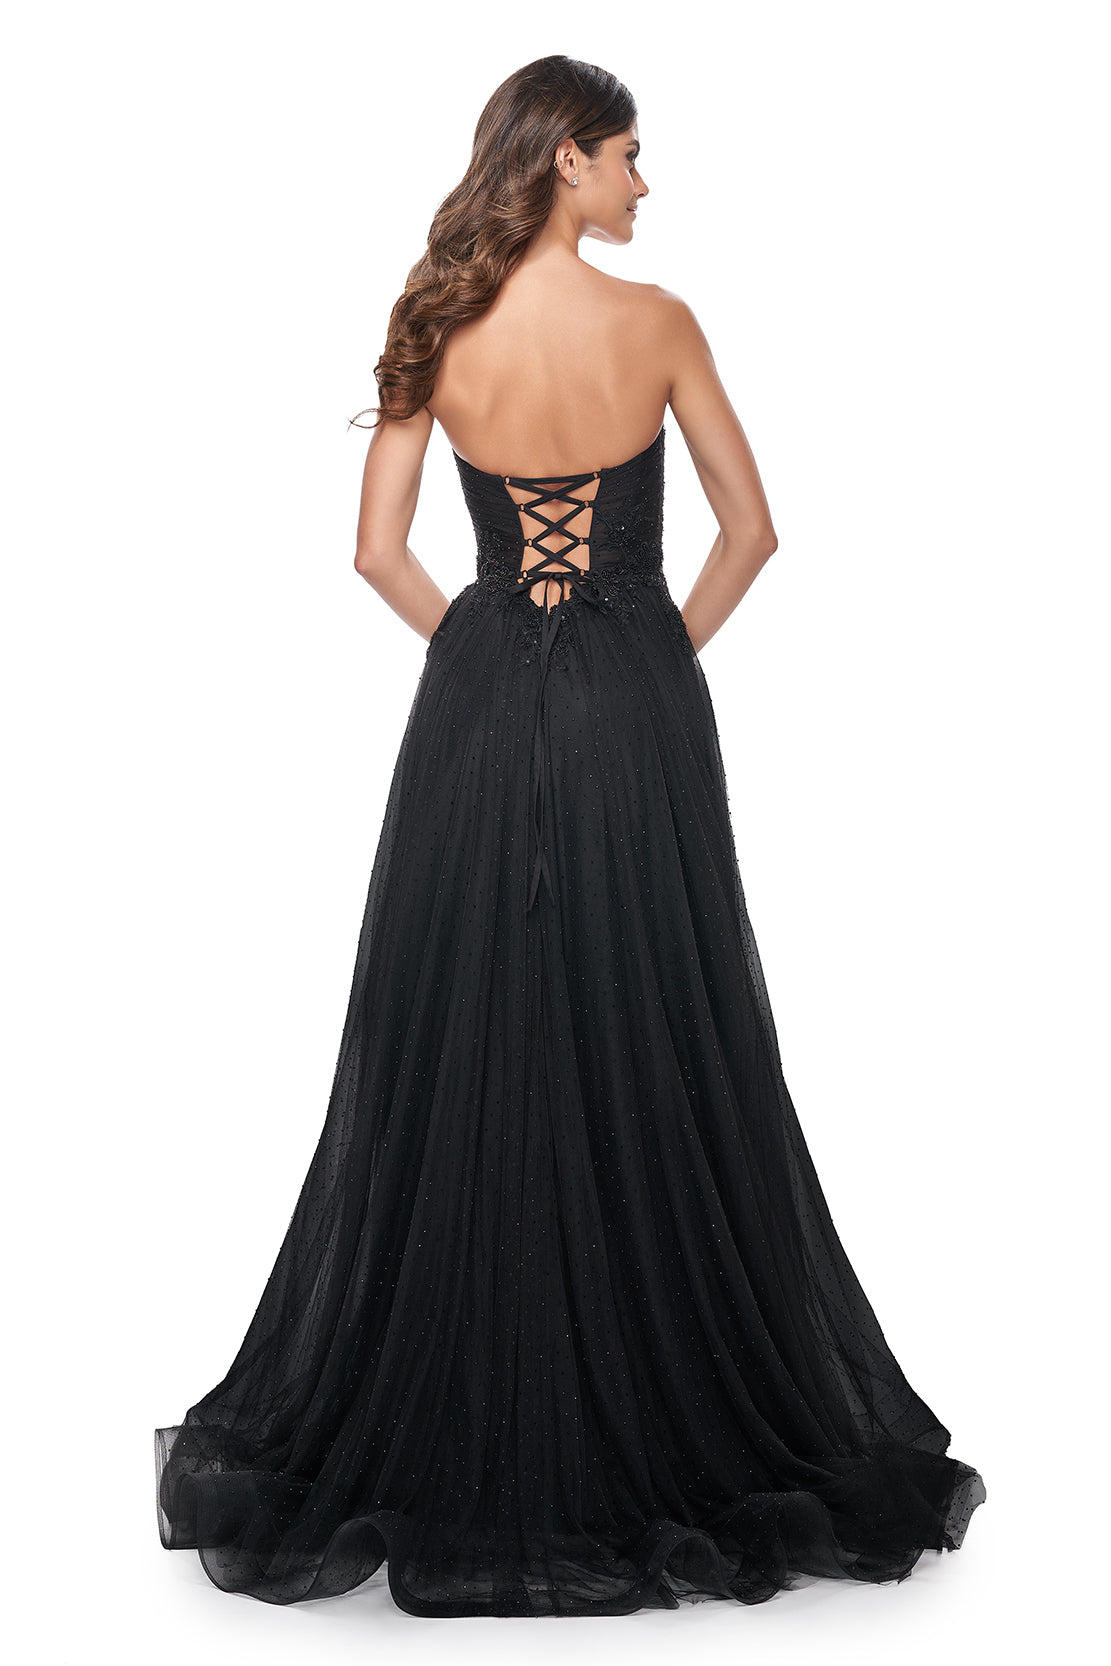 La Femme - 32005 - Sweetheart Strapless Rhinestone Prom Gown